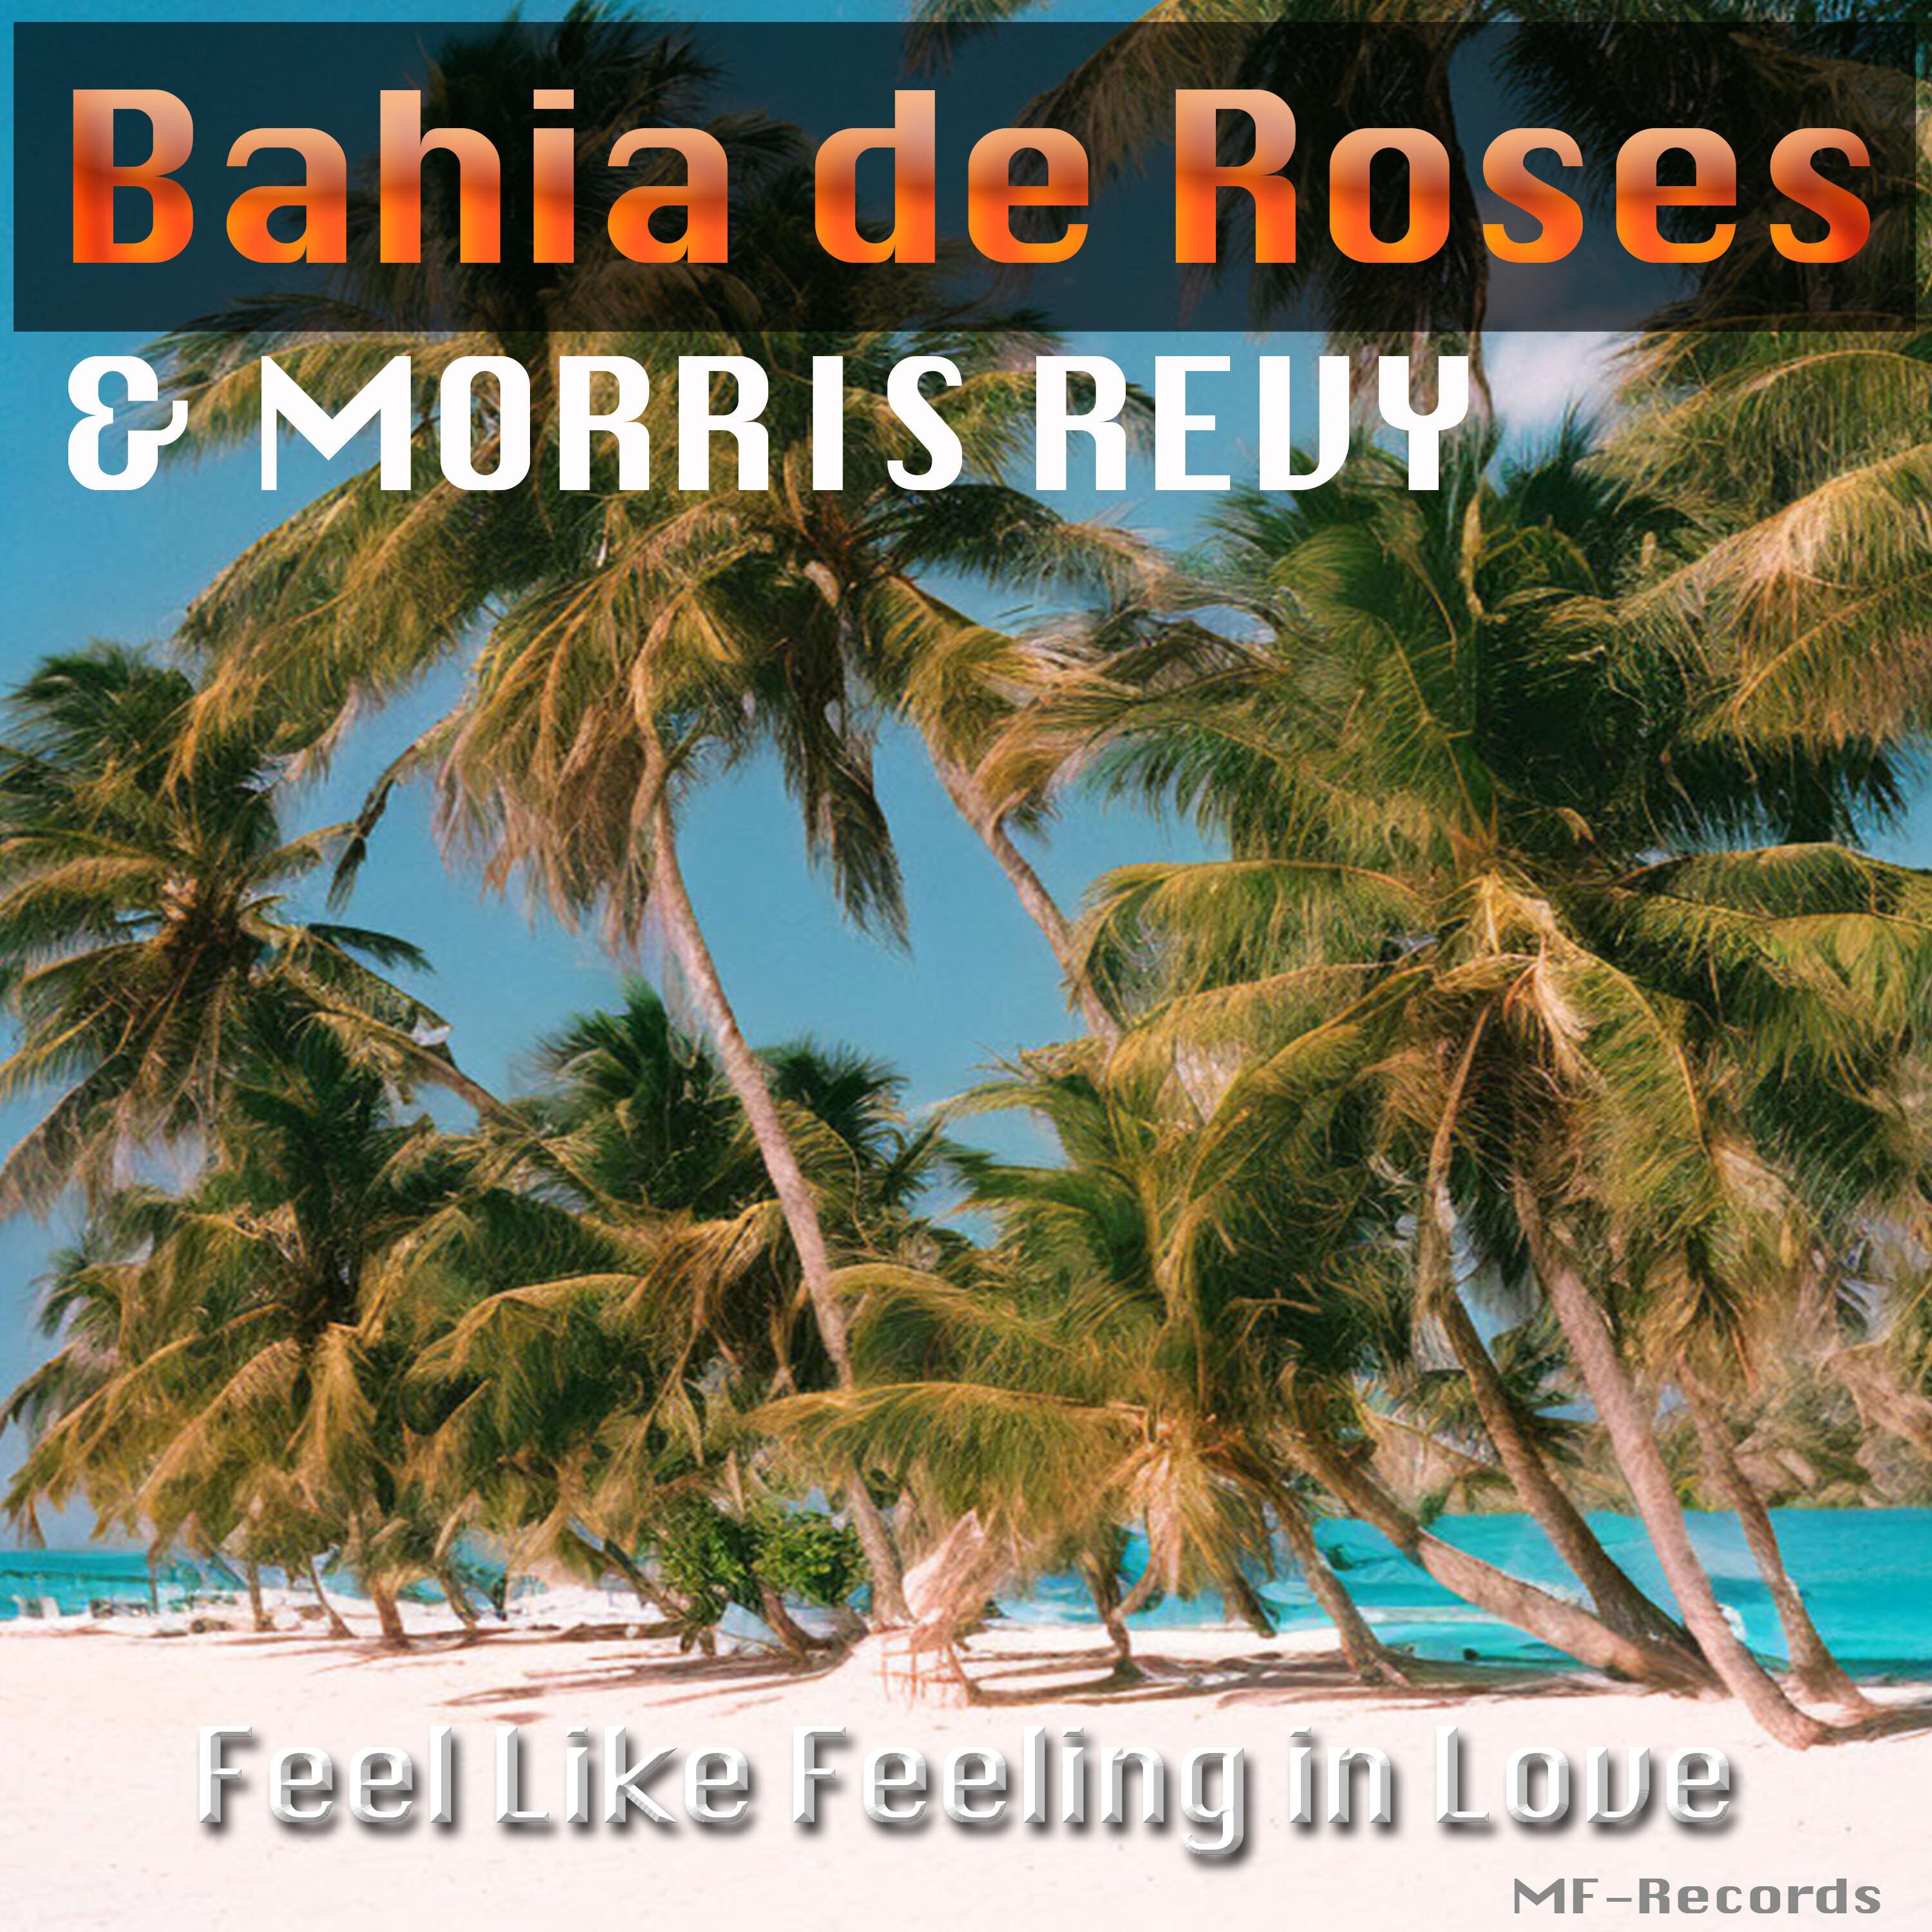 Bahia de Roses - One Chance